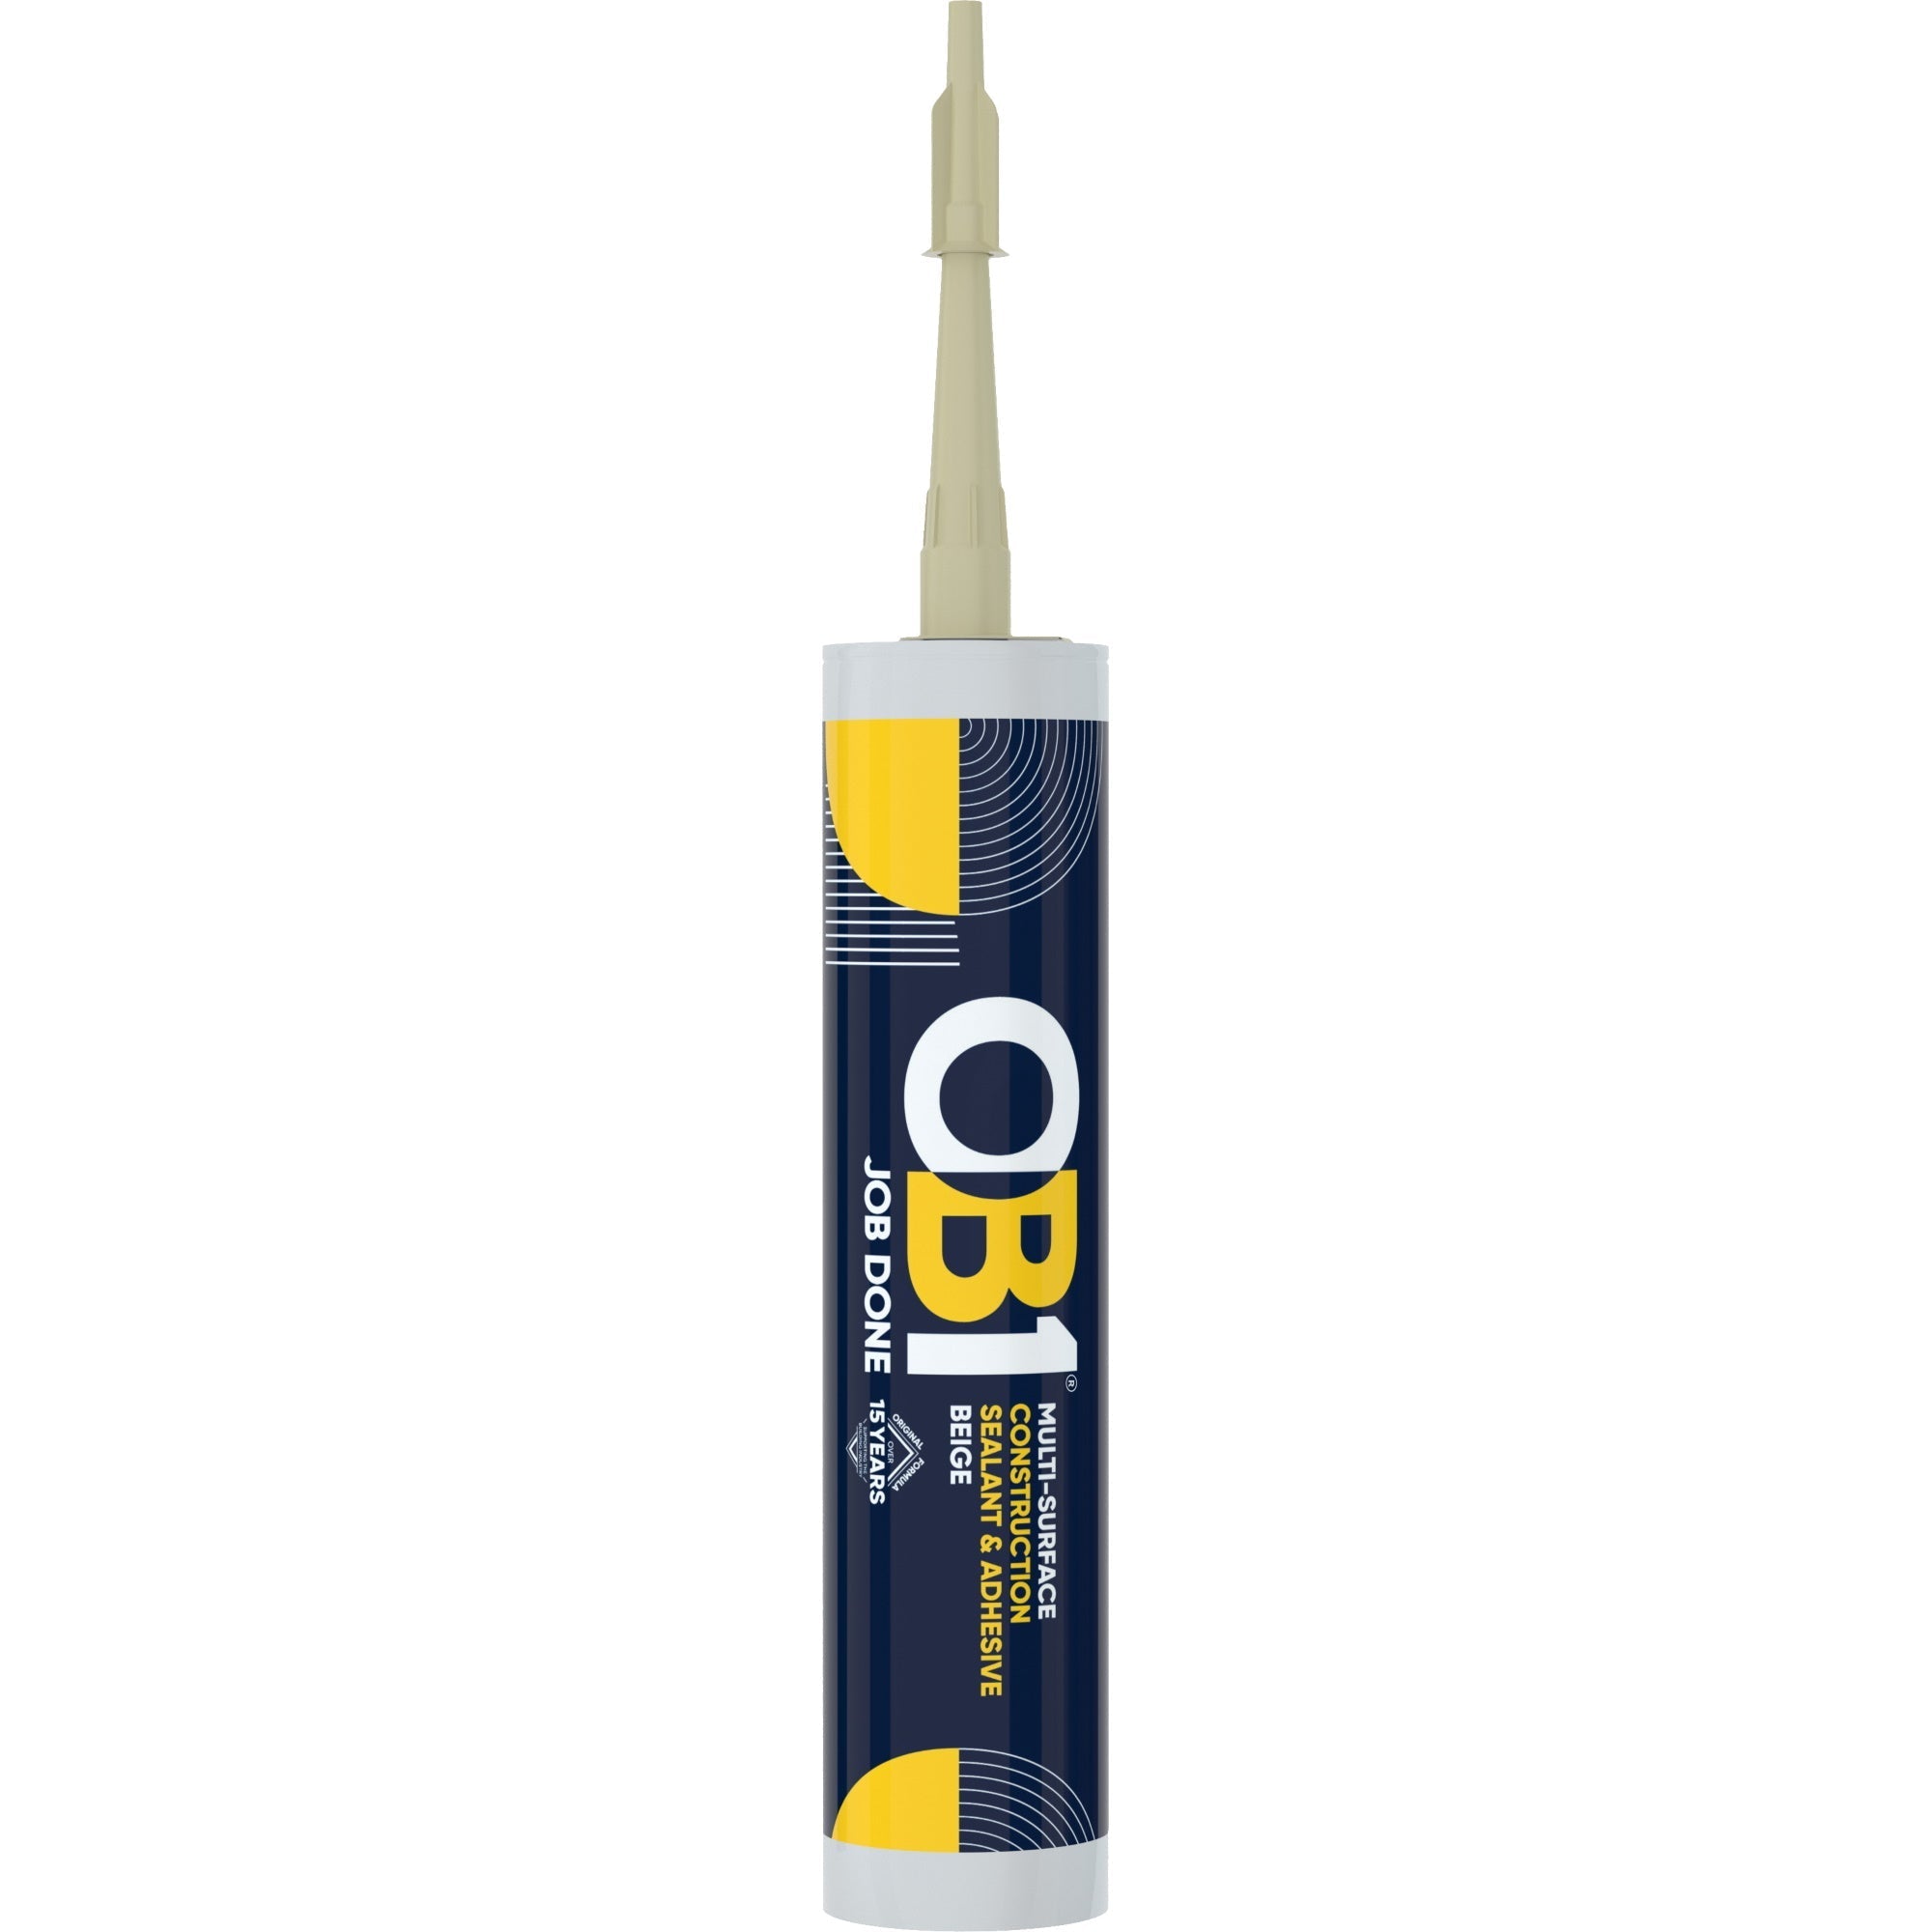 OB1 Job Done Multi-Surface Sealant & Adhesive 290ml Cartridge - Beige - Premium Sealants from Bostik - Just $12.5! Shop now at W Hurst & Son (IW) Ltd